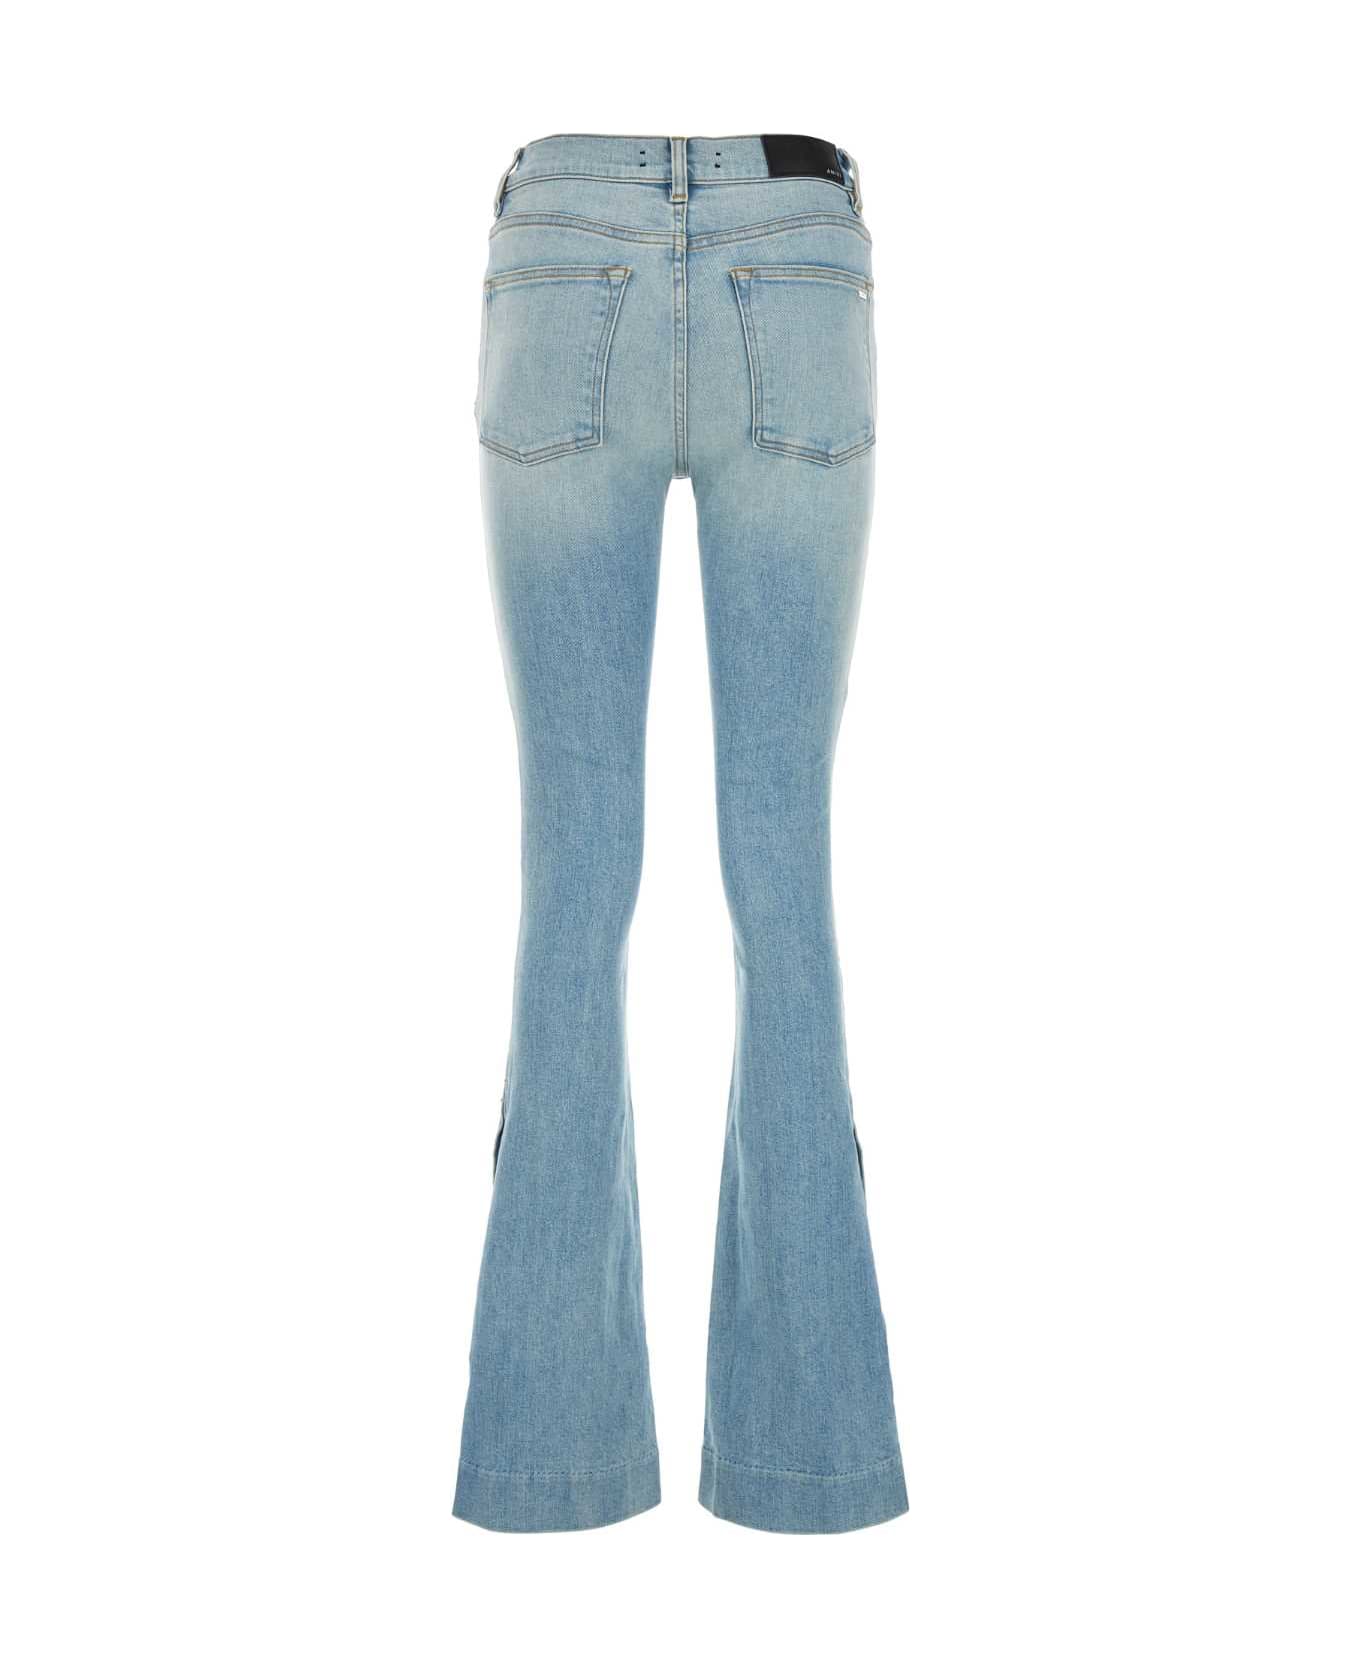 AMIRI Stretch Denim Jeans - LIGHTINDIGO